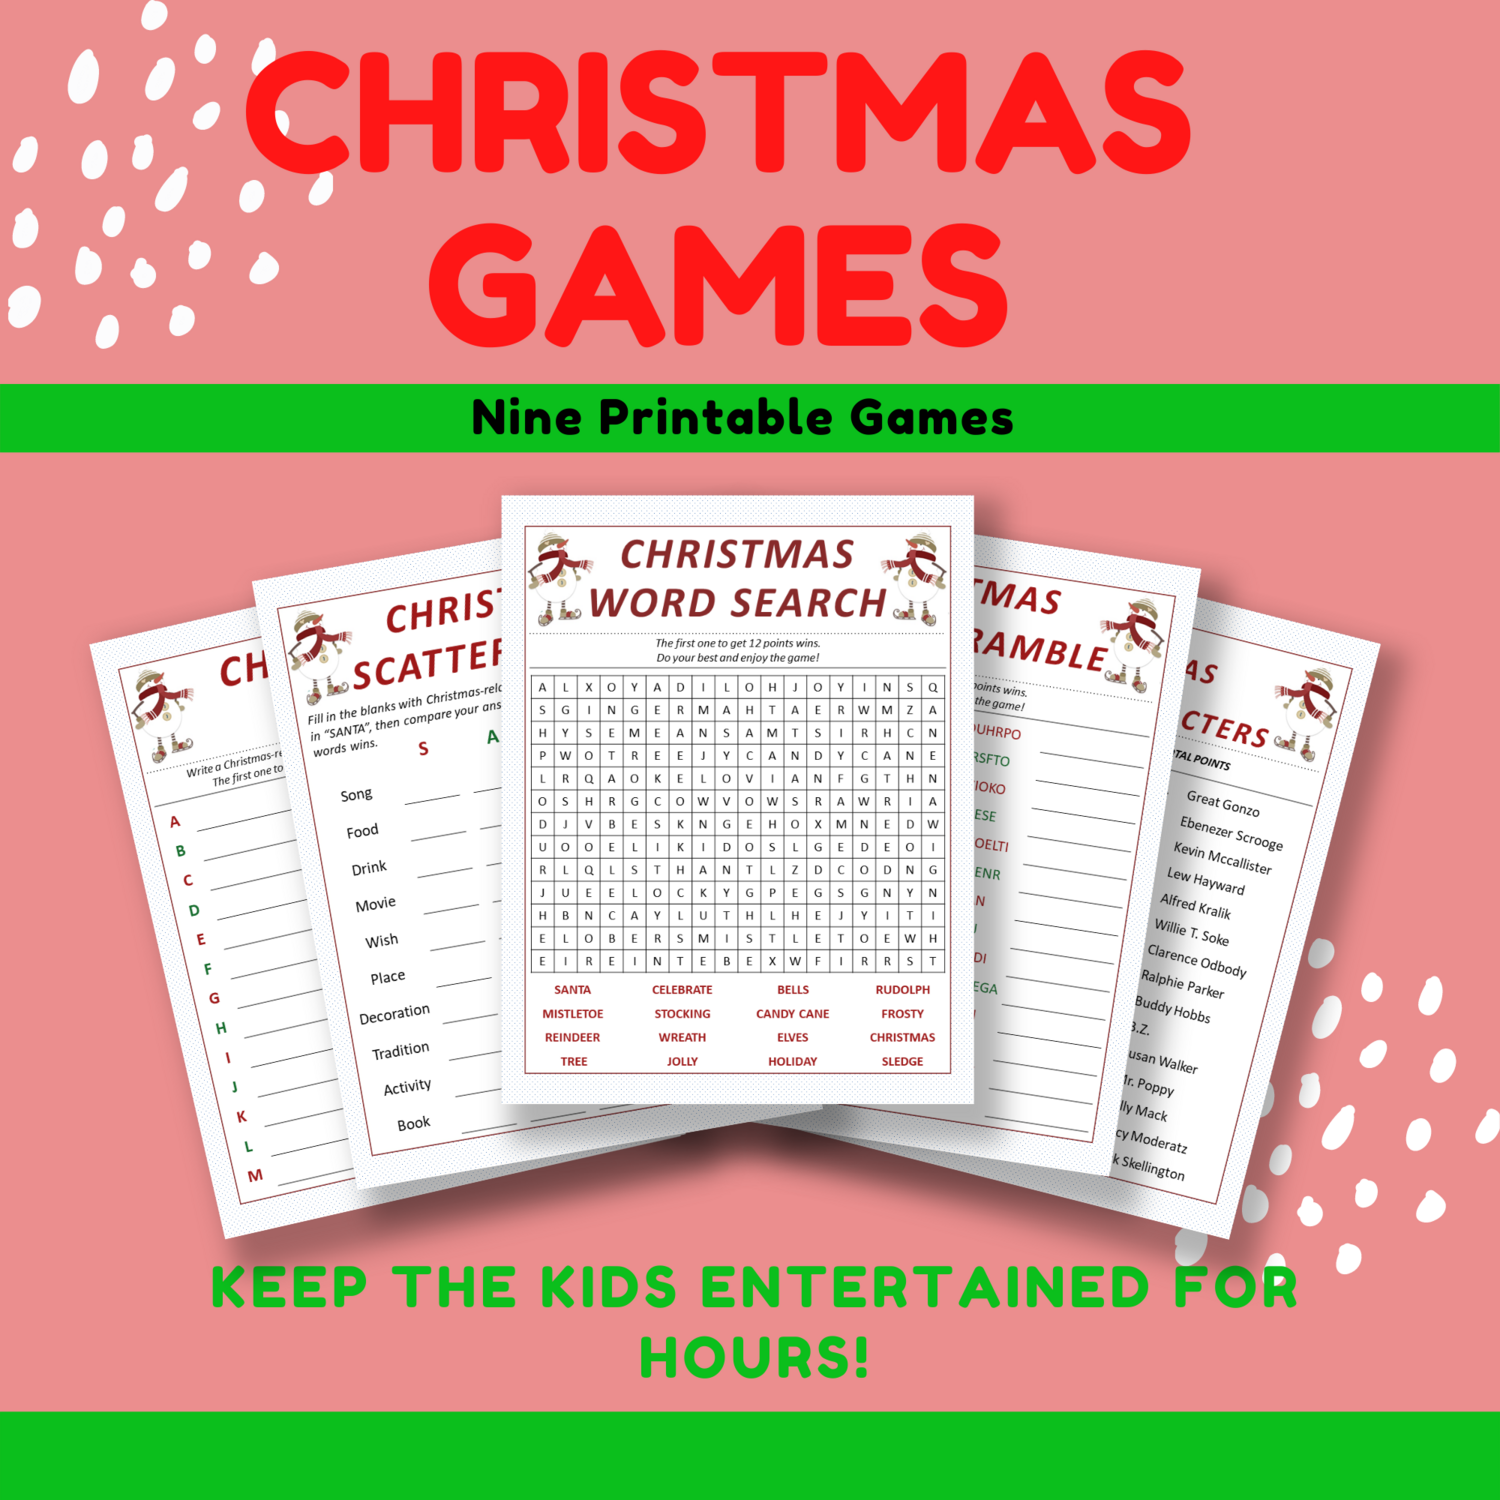 Christmas Games for the whole family - PDF printable